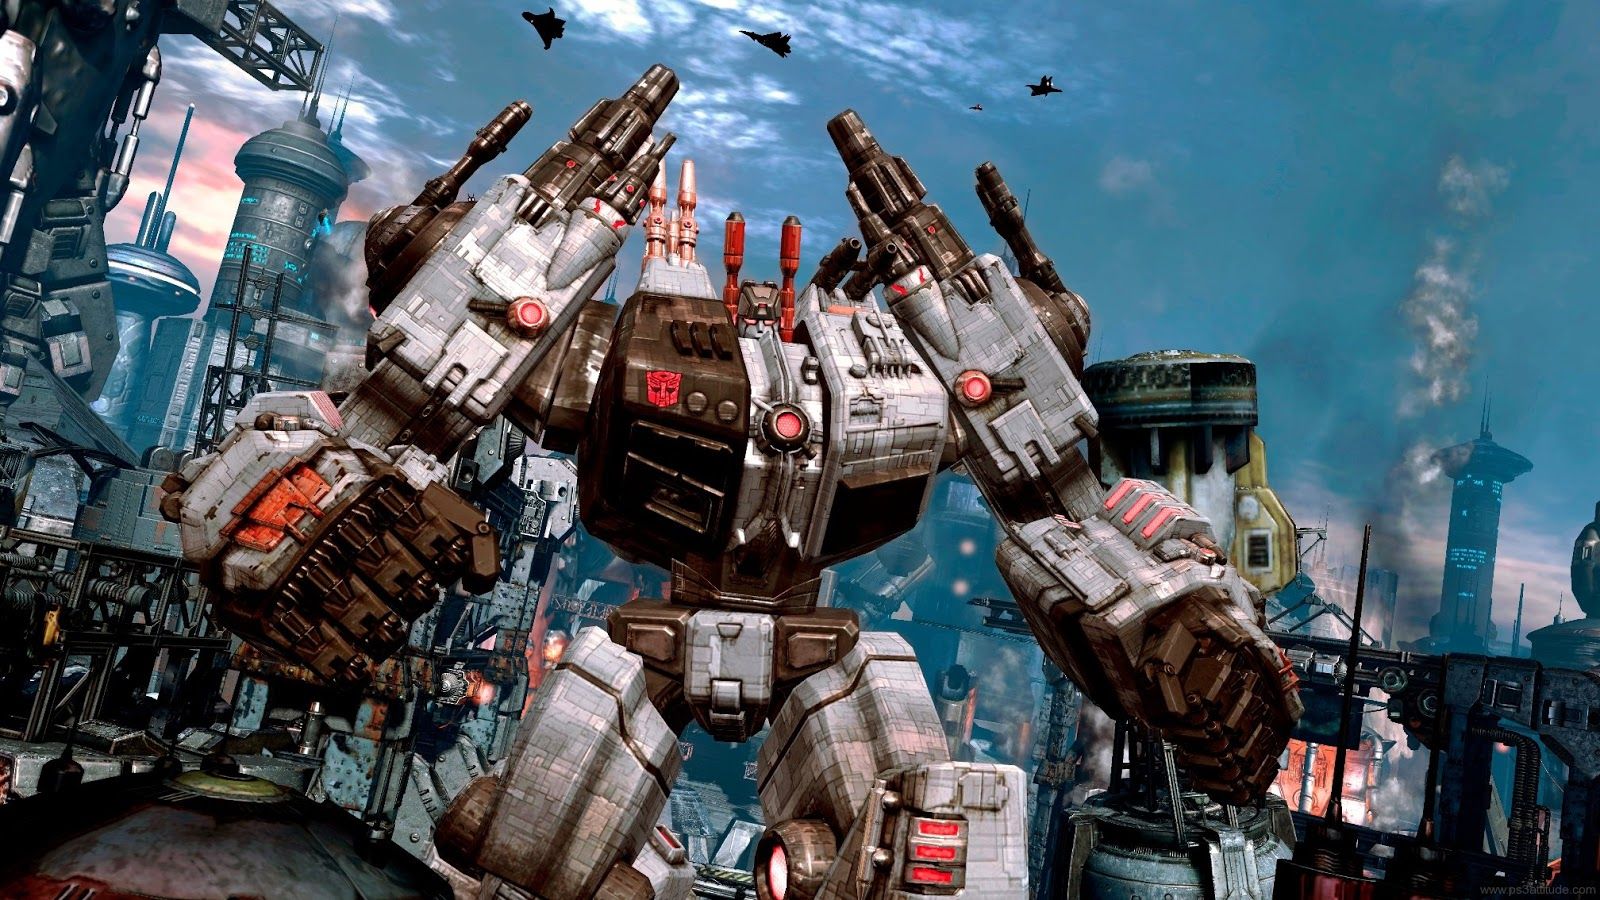 Metroplex of Cybertron game screen shot. Transformers, Transformers collection, Transformers art